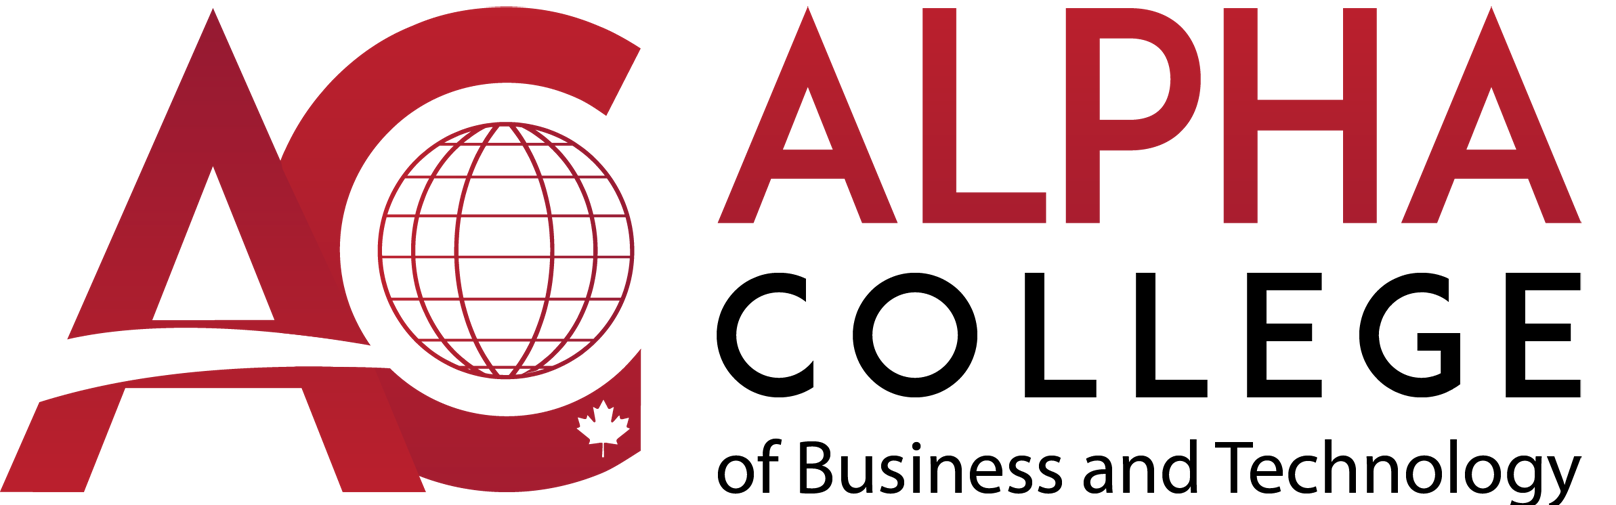 Alpha College logo